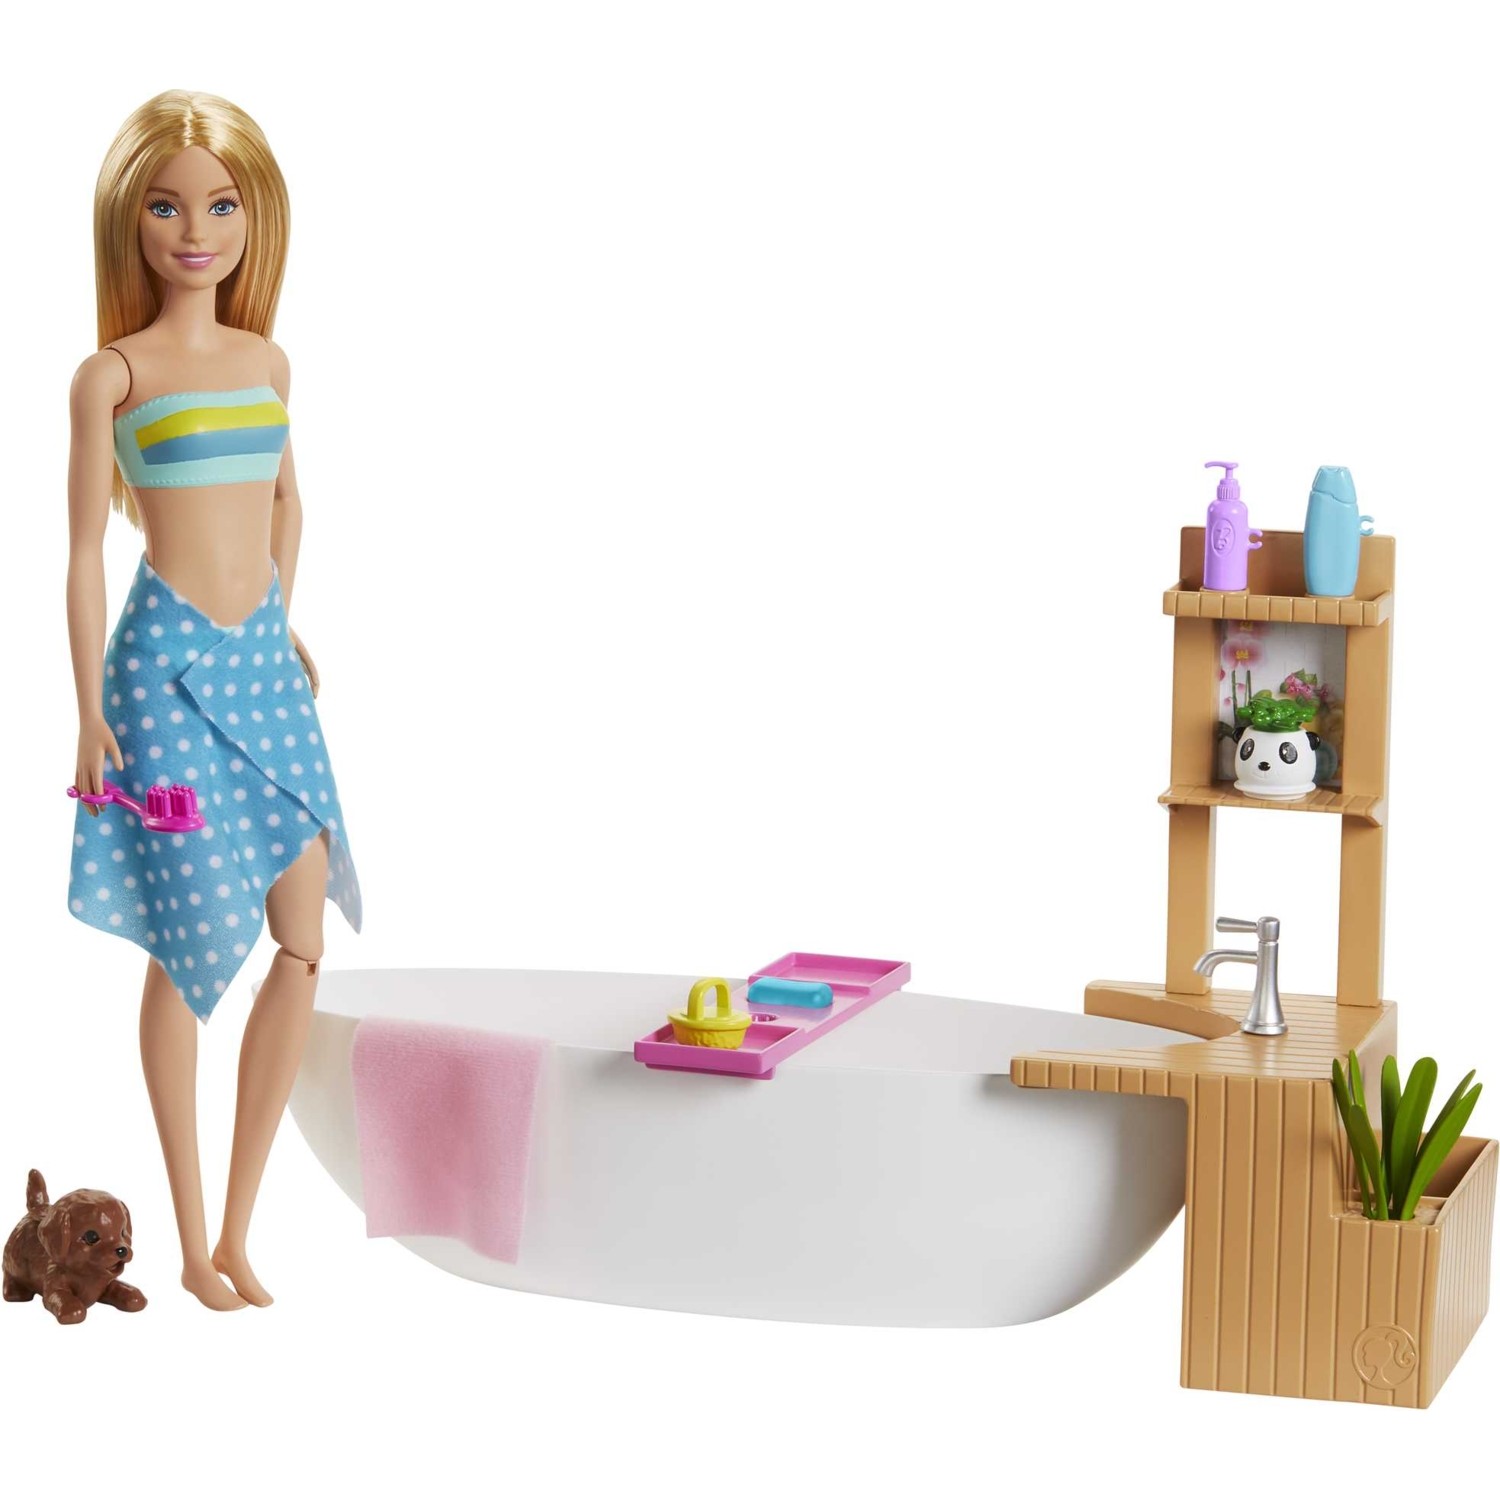 Игровой набор Barbie ванна GJN32 кукла classic санни мэдисон 28см желтая с акс rainbow 42684